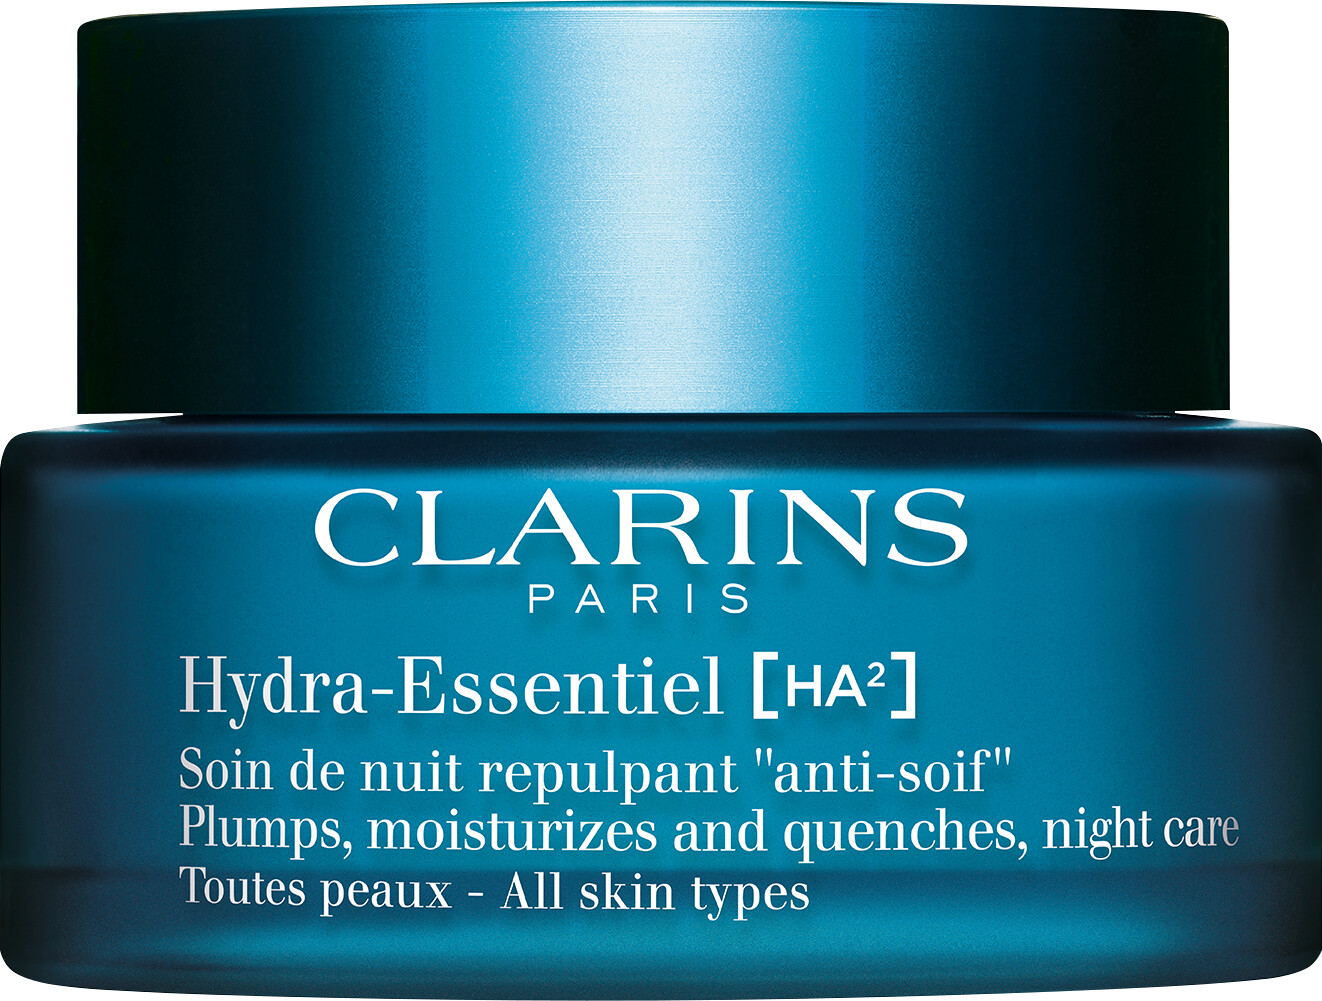 Clarins Hydra-Essentiel [HA2] Night Cream - All Skin Types 50ml